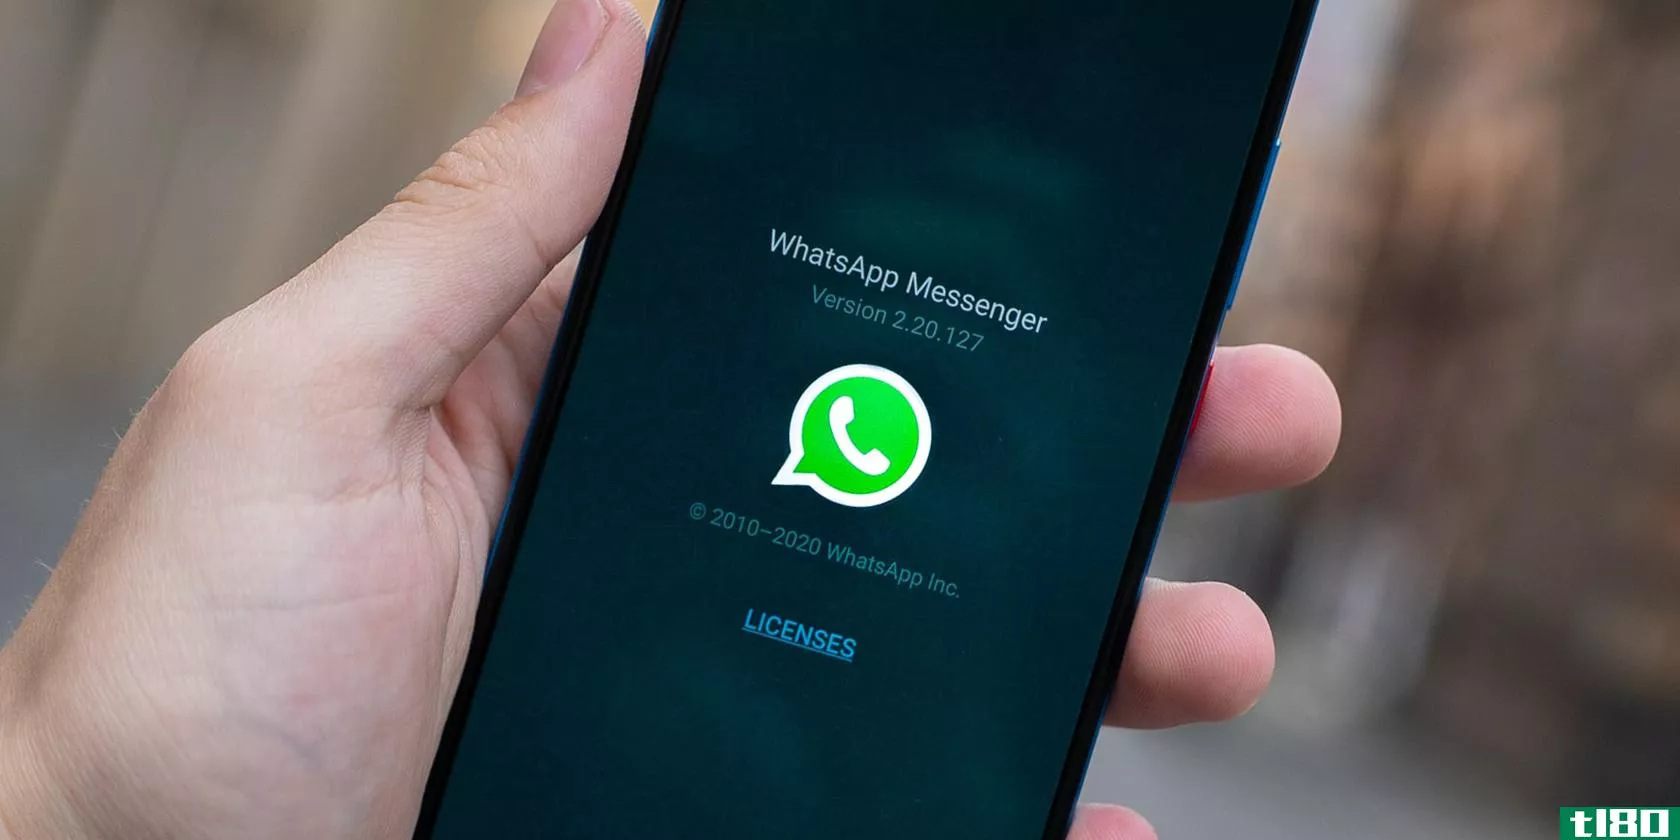 WhatsApp Messenger opening on mobile